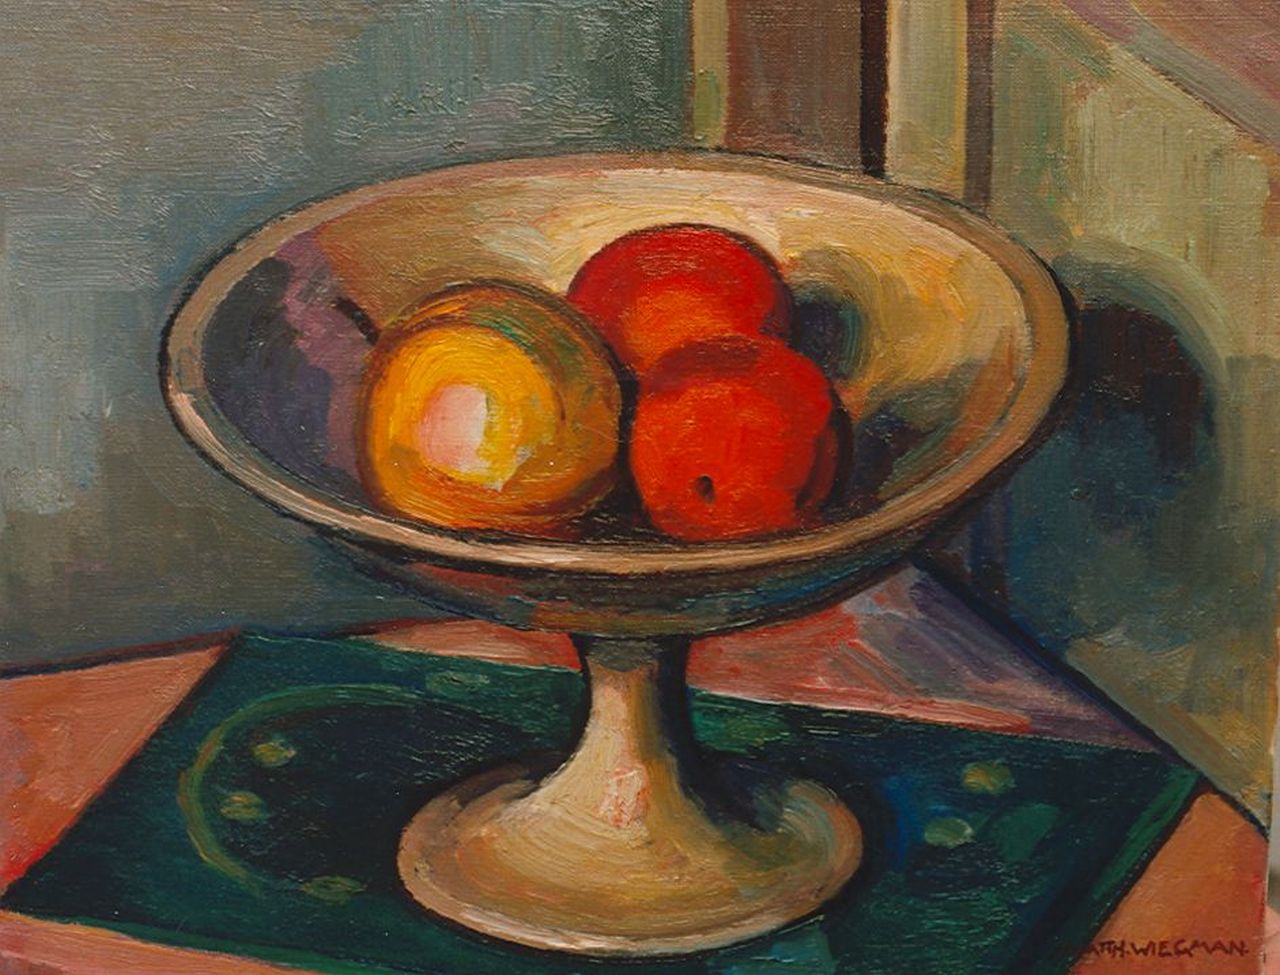 Wiegman M.J.M.  | Mattheus Johannes Marie 'Matthieu' Wiegman, Stilleven met appels op fruitschaal, olieverf op doek 40,0 x 50,0 cm, gesigneerd rechtsonder